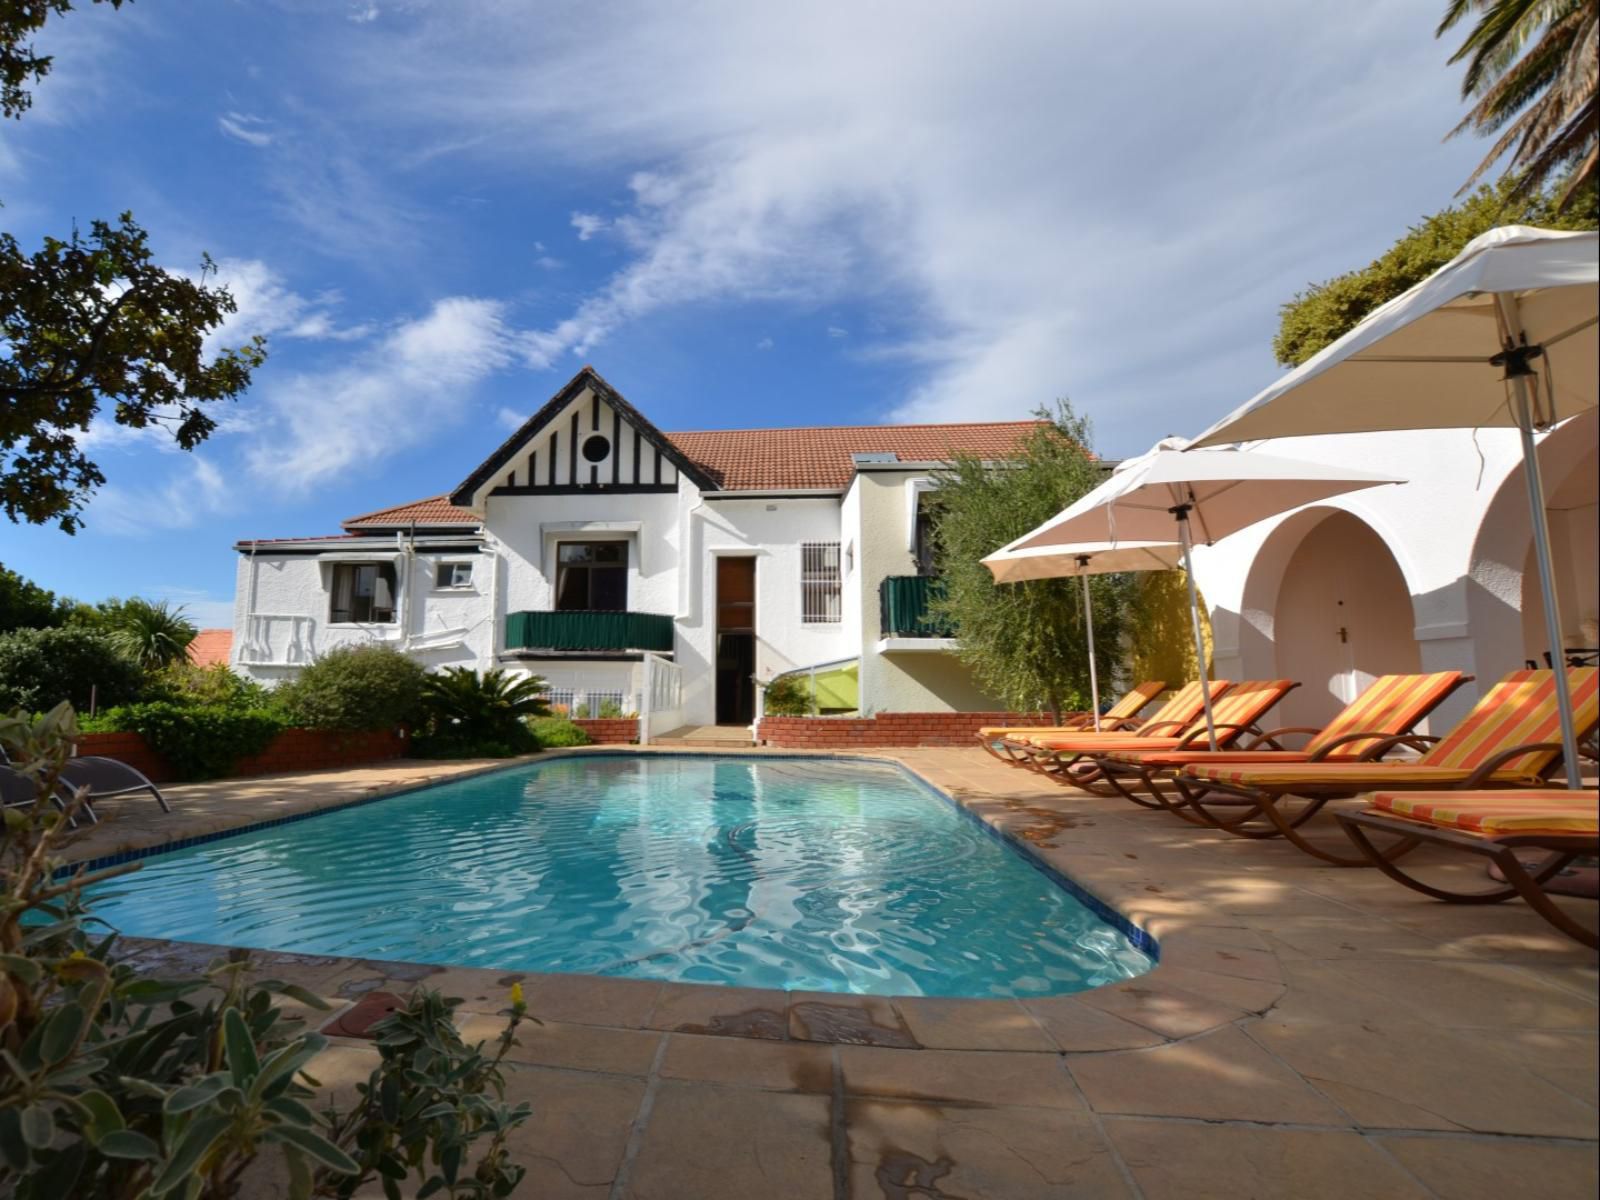 Villa Lutzi Oranjezicht Cape Town Western Cape South Africa House, Building, Architecture, Swimming Pool